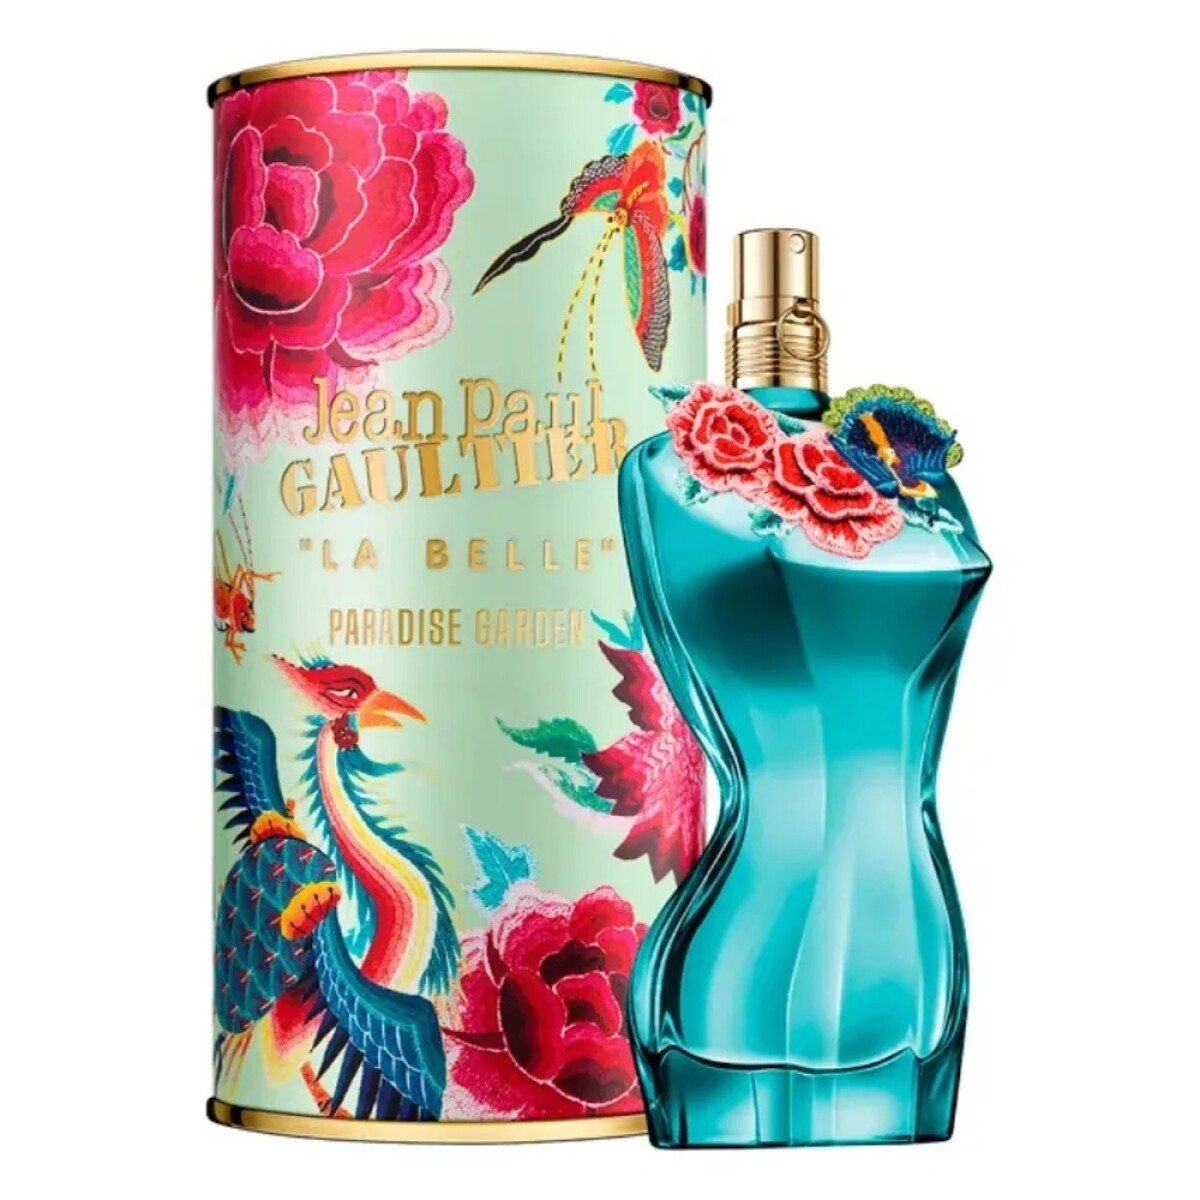 Perfume Jean Paul Gaultier La Belle Paradise Garden Edp 100ml 